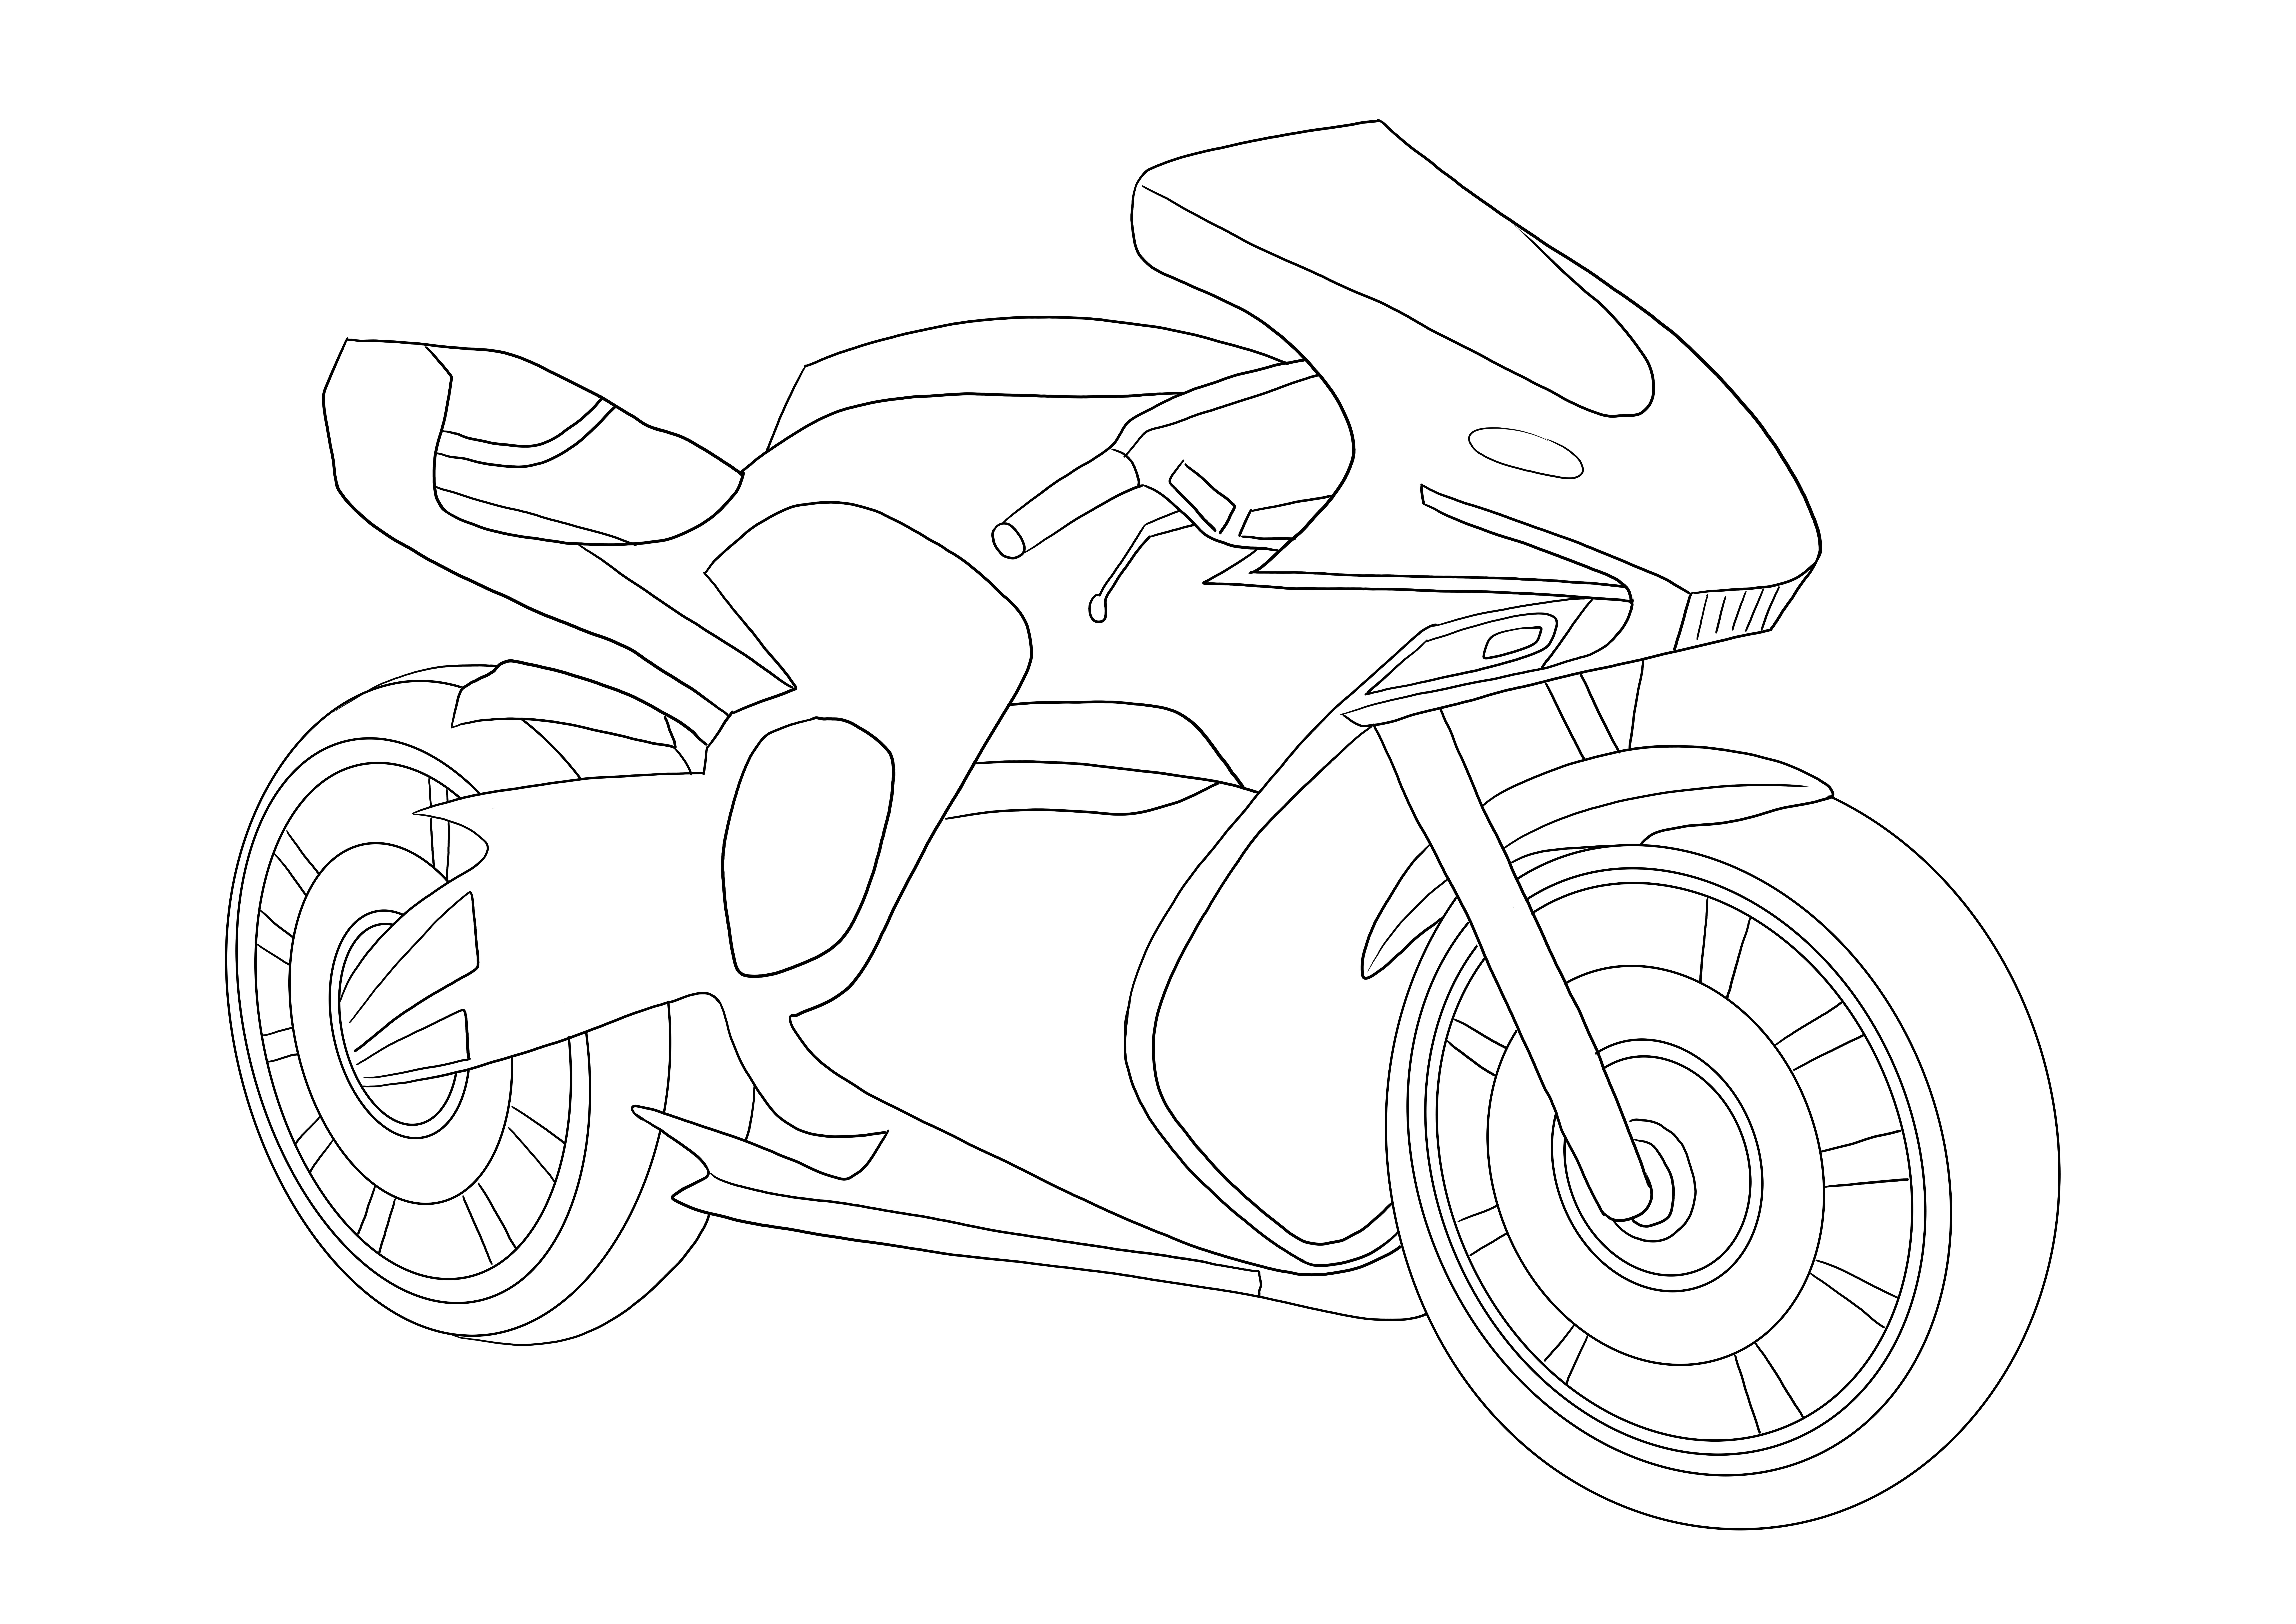 Imagem legal de colorir moto de corrida para baixar gratuitamente